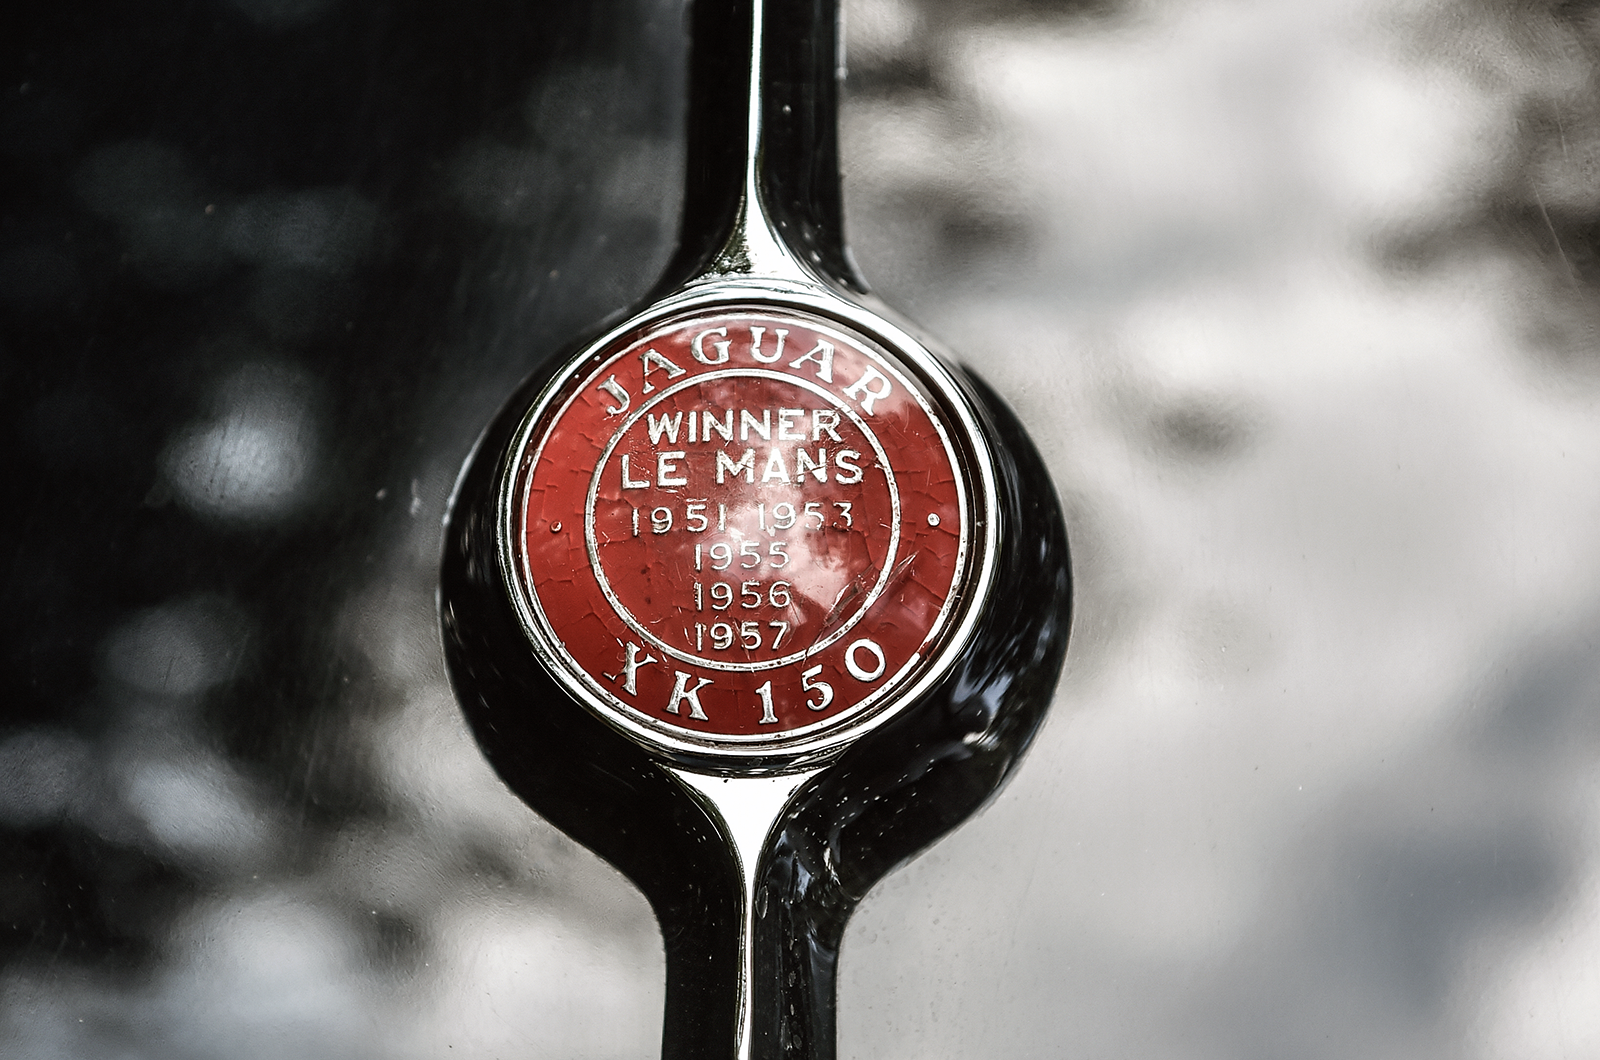 Classic & Sports Car – Jaguar XK150: the Big Cat that came home